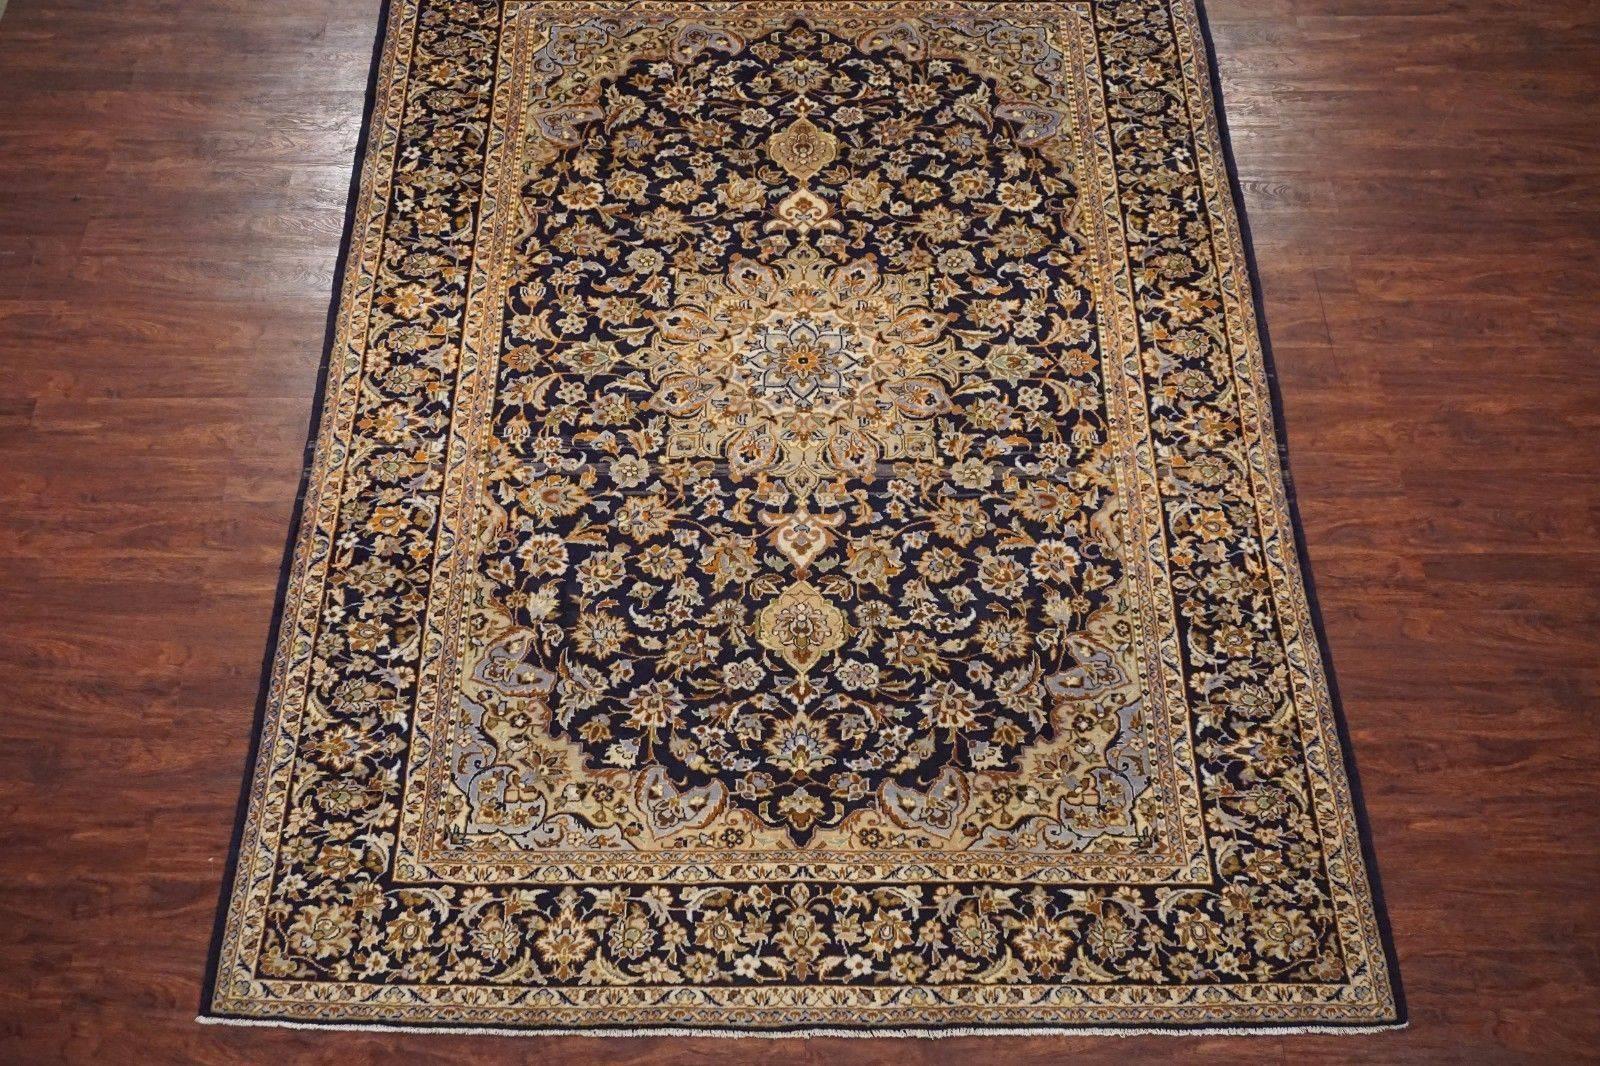 Vintage Persian Isfahan rug with abrash

circa 1940

Measures: 7' 7